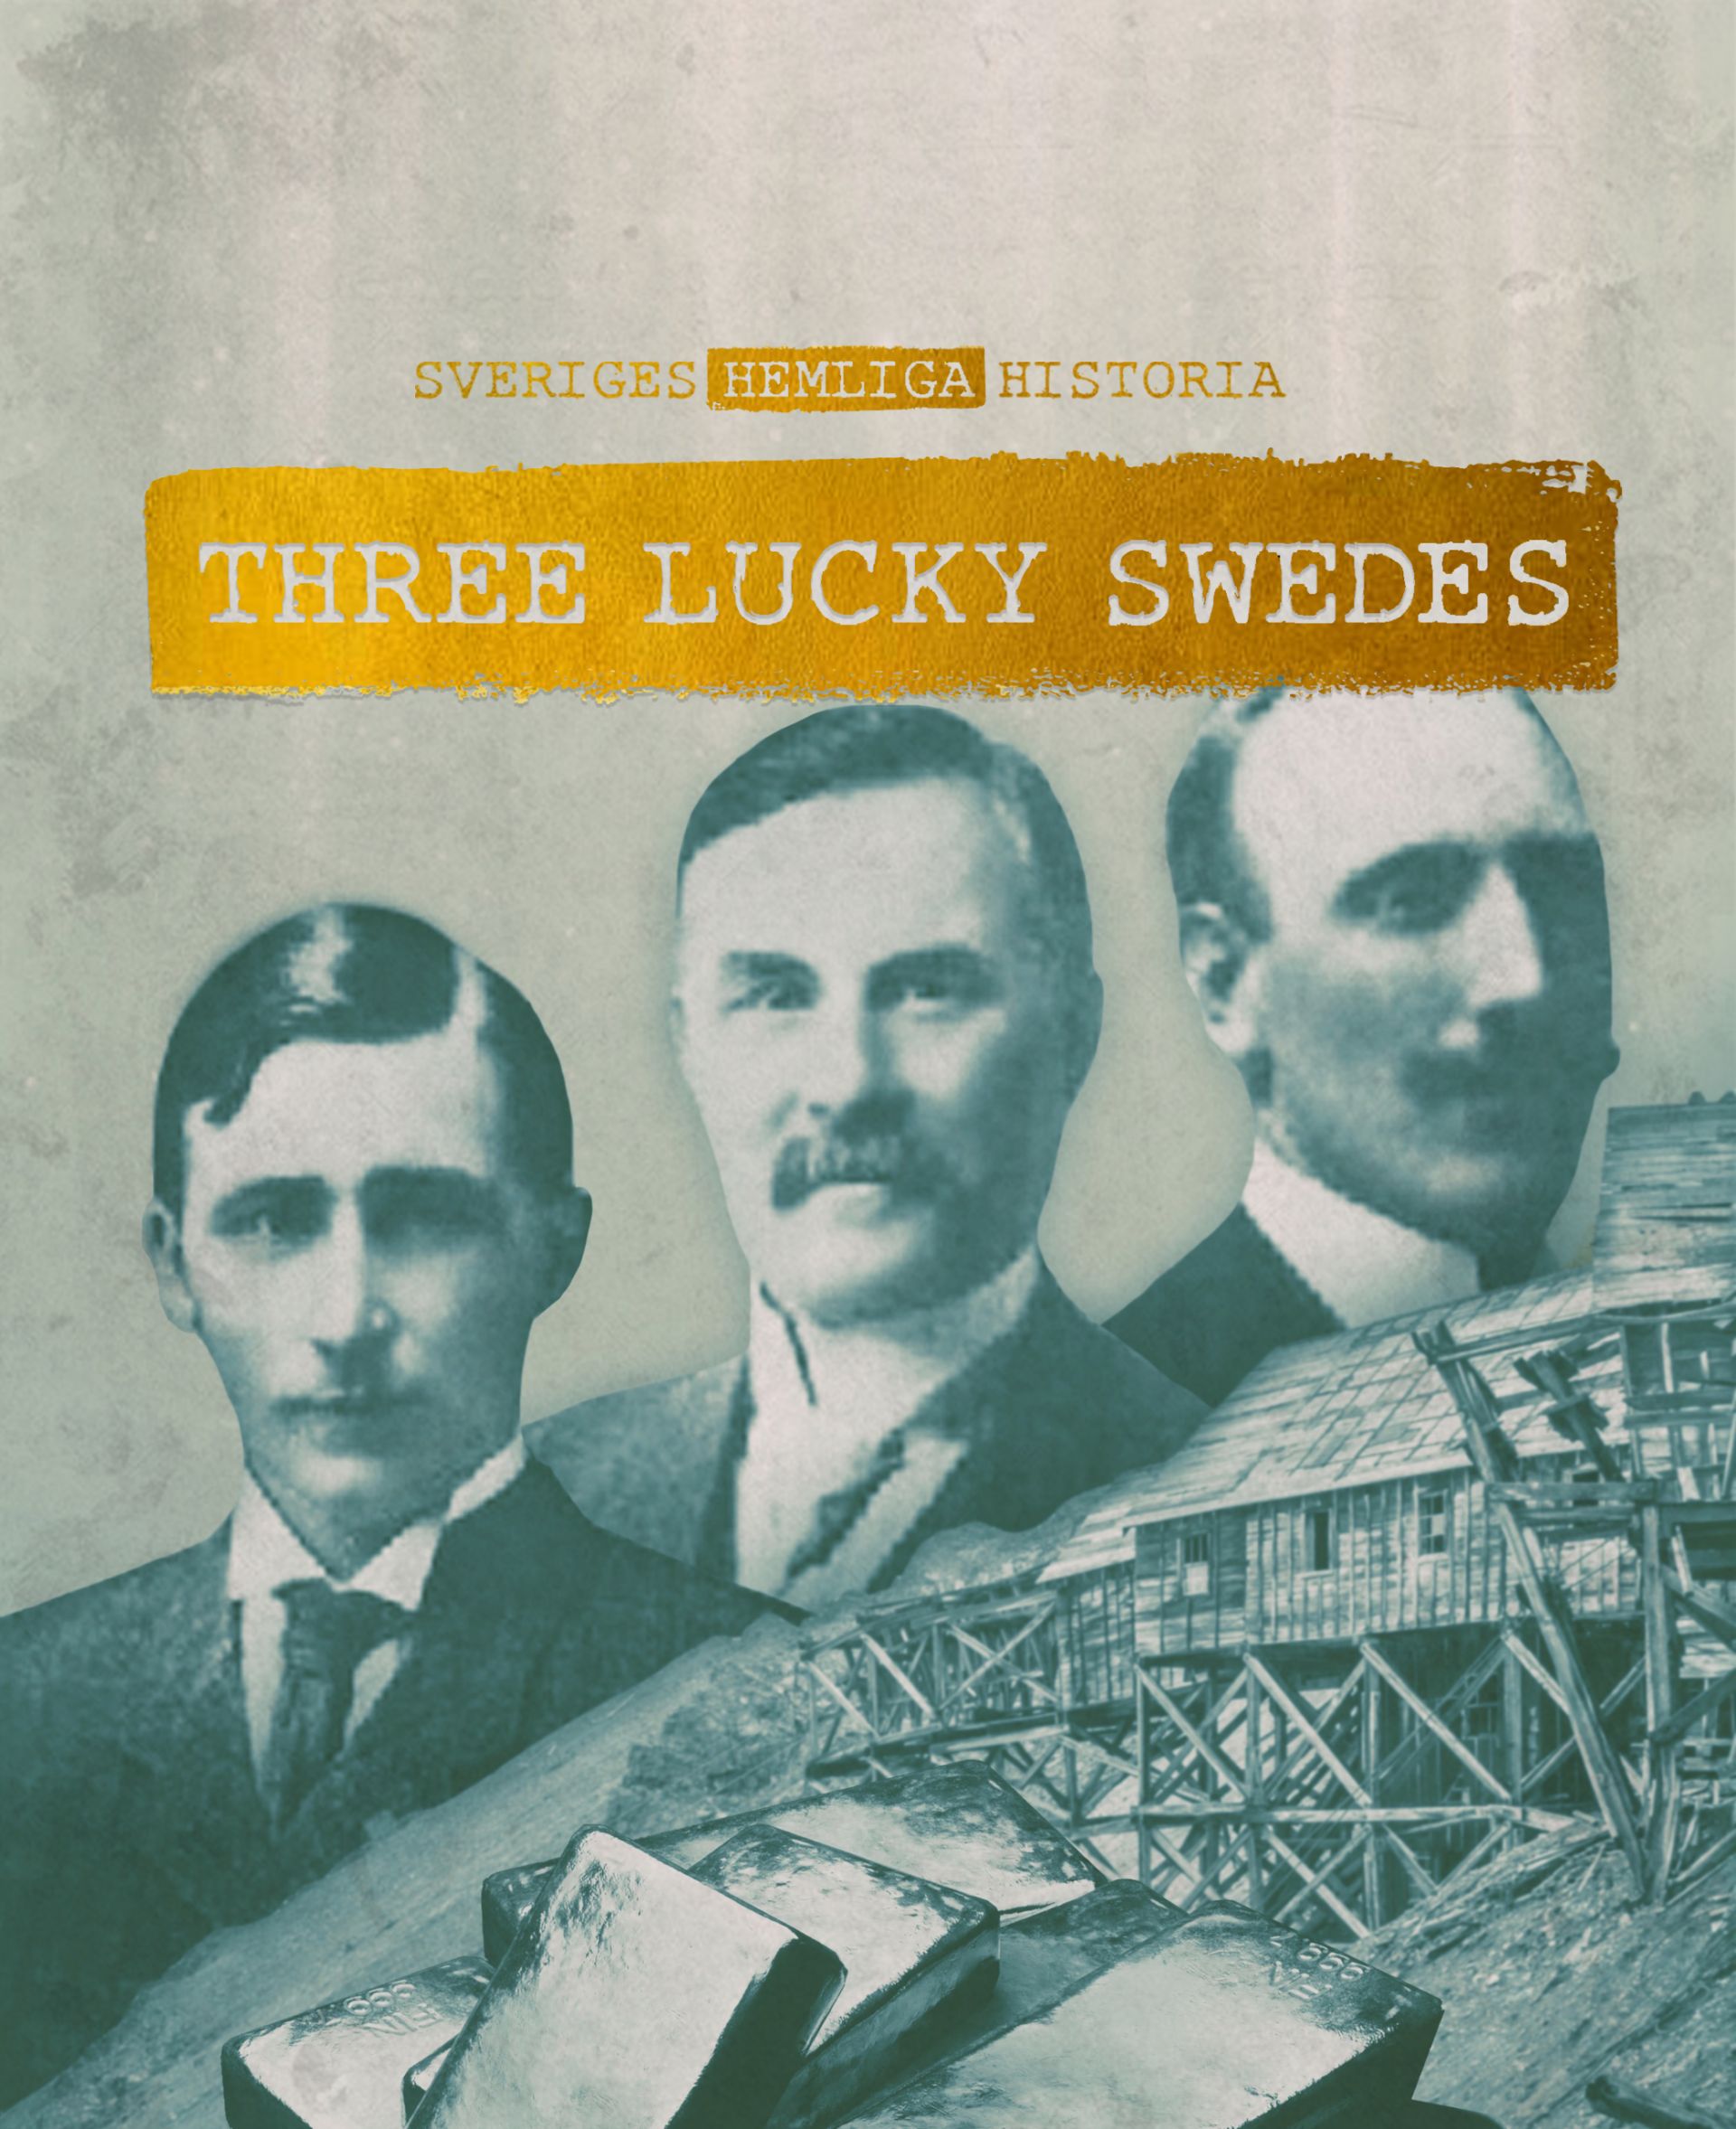 Sveriges Hemliga Historia: Three Lucky Swedes